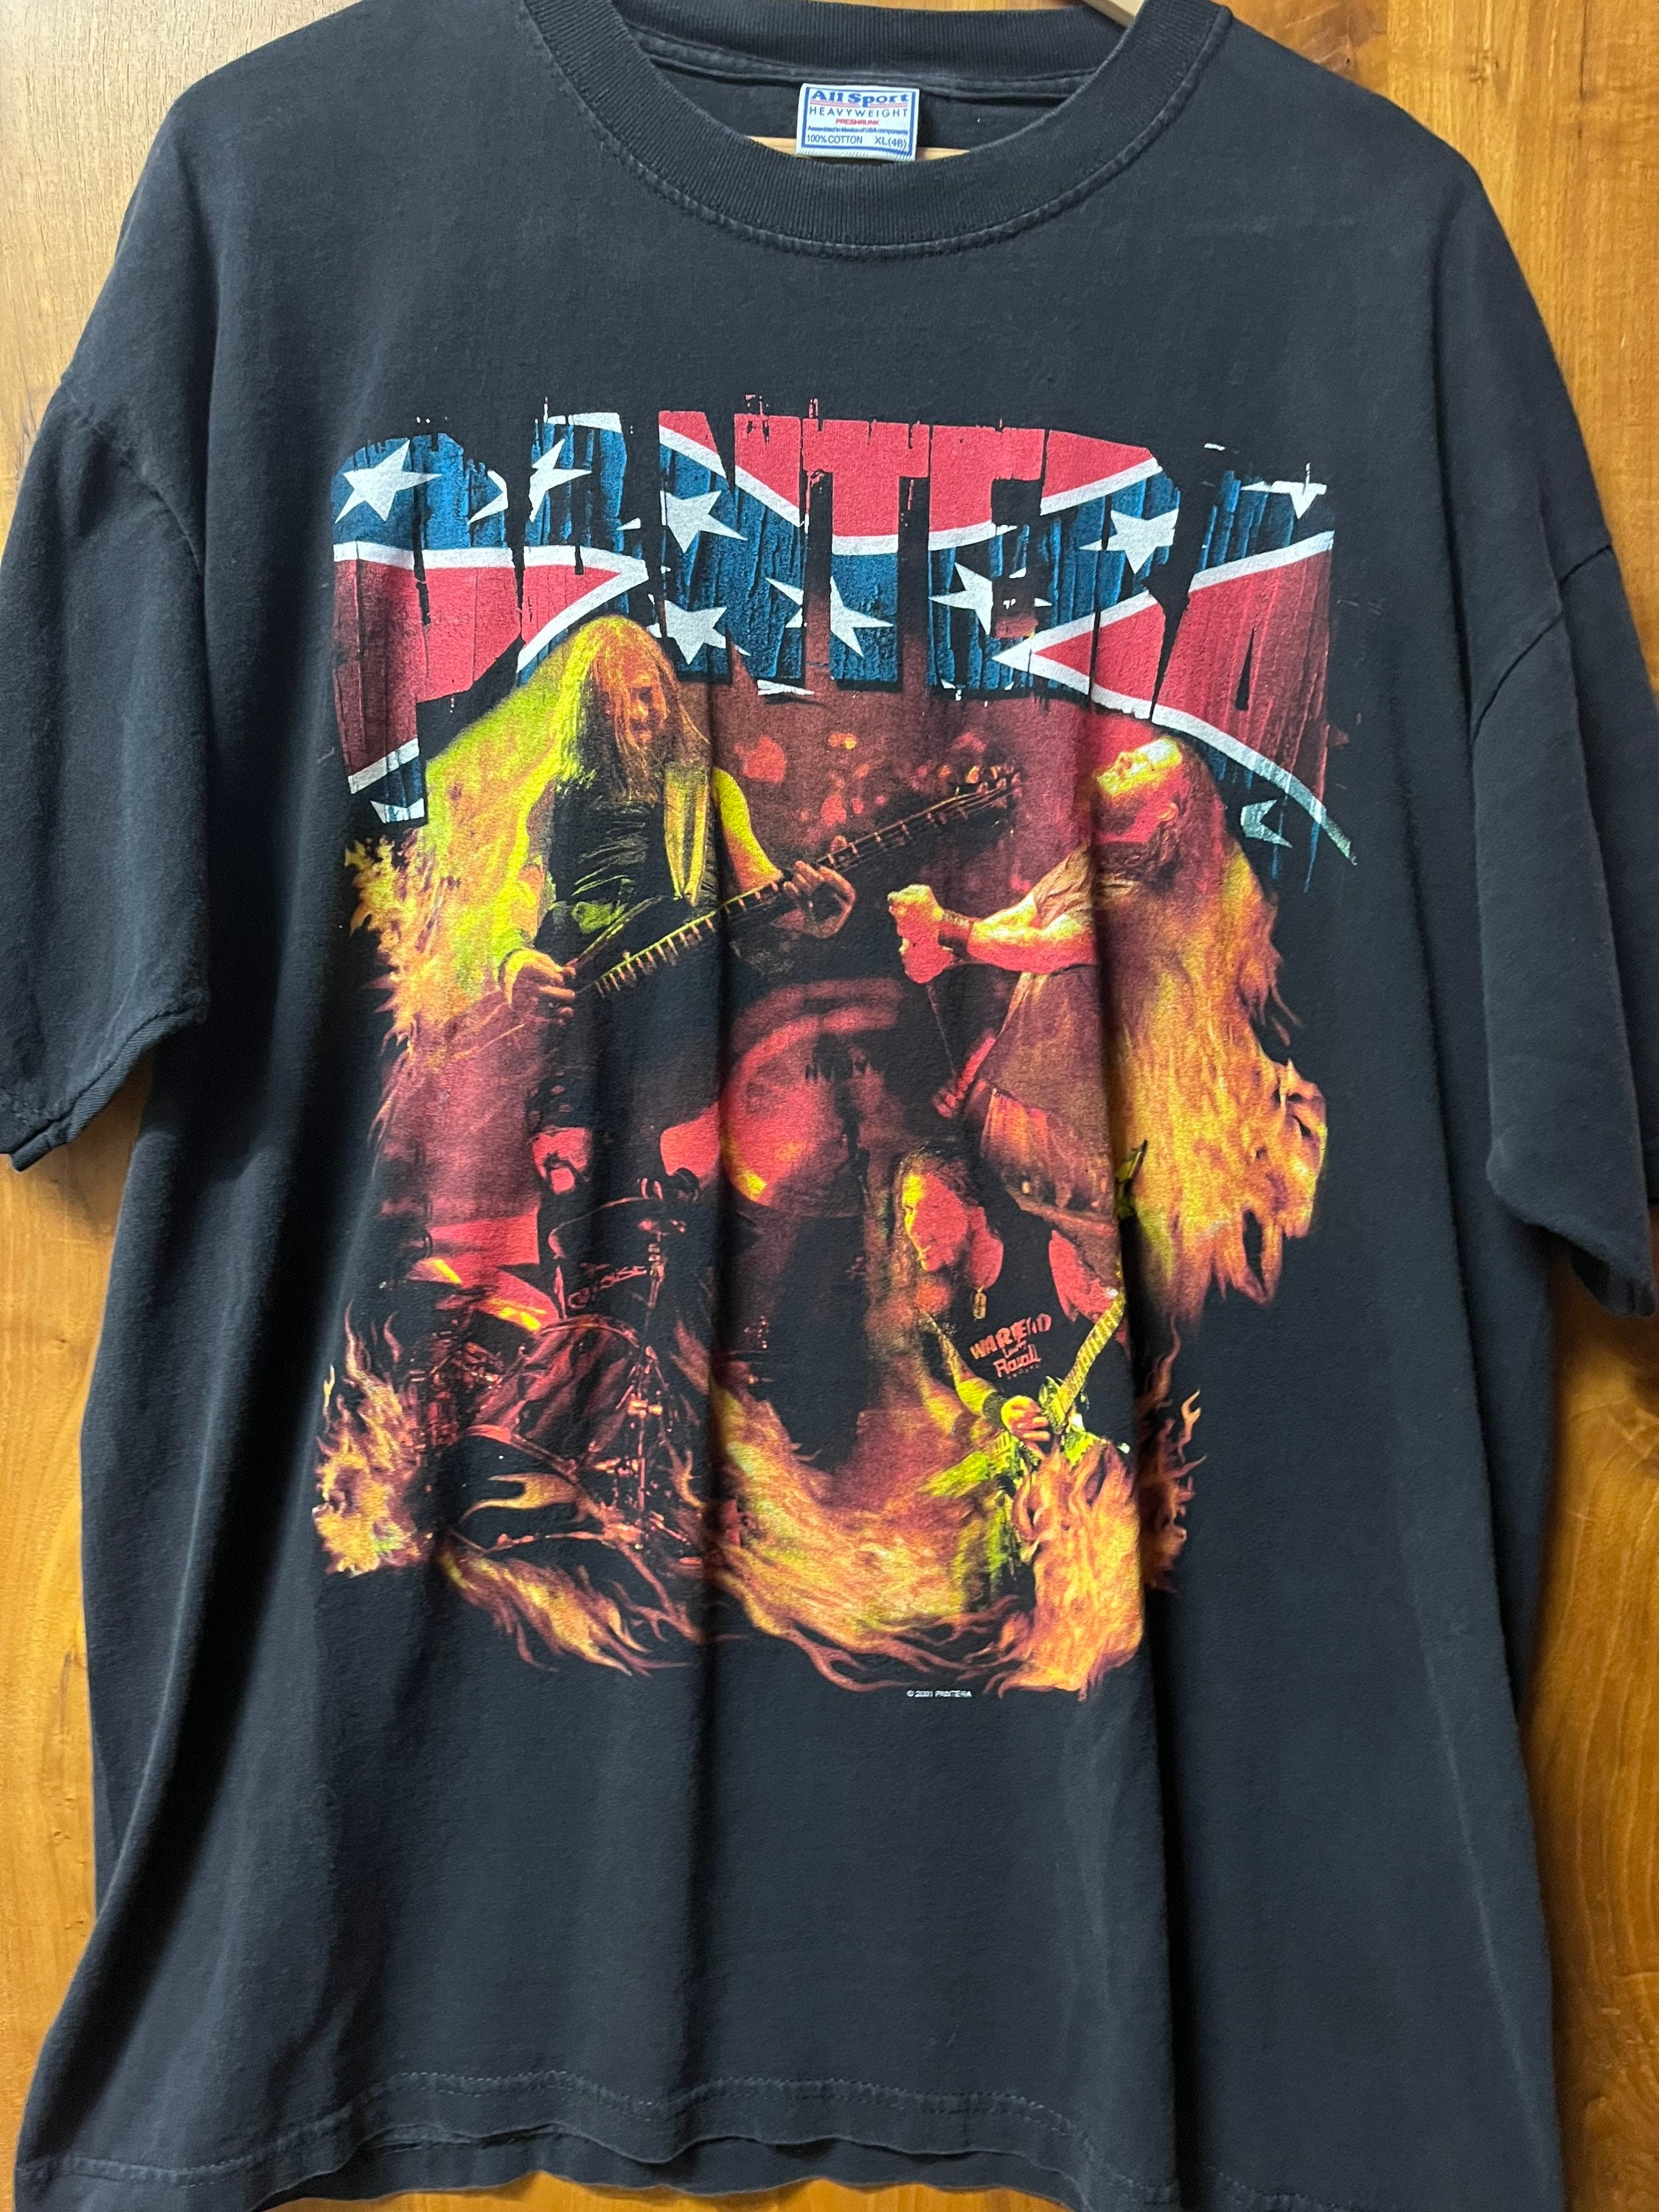 2001 PANTERA Band T Shirt sz XL - Etsy